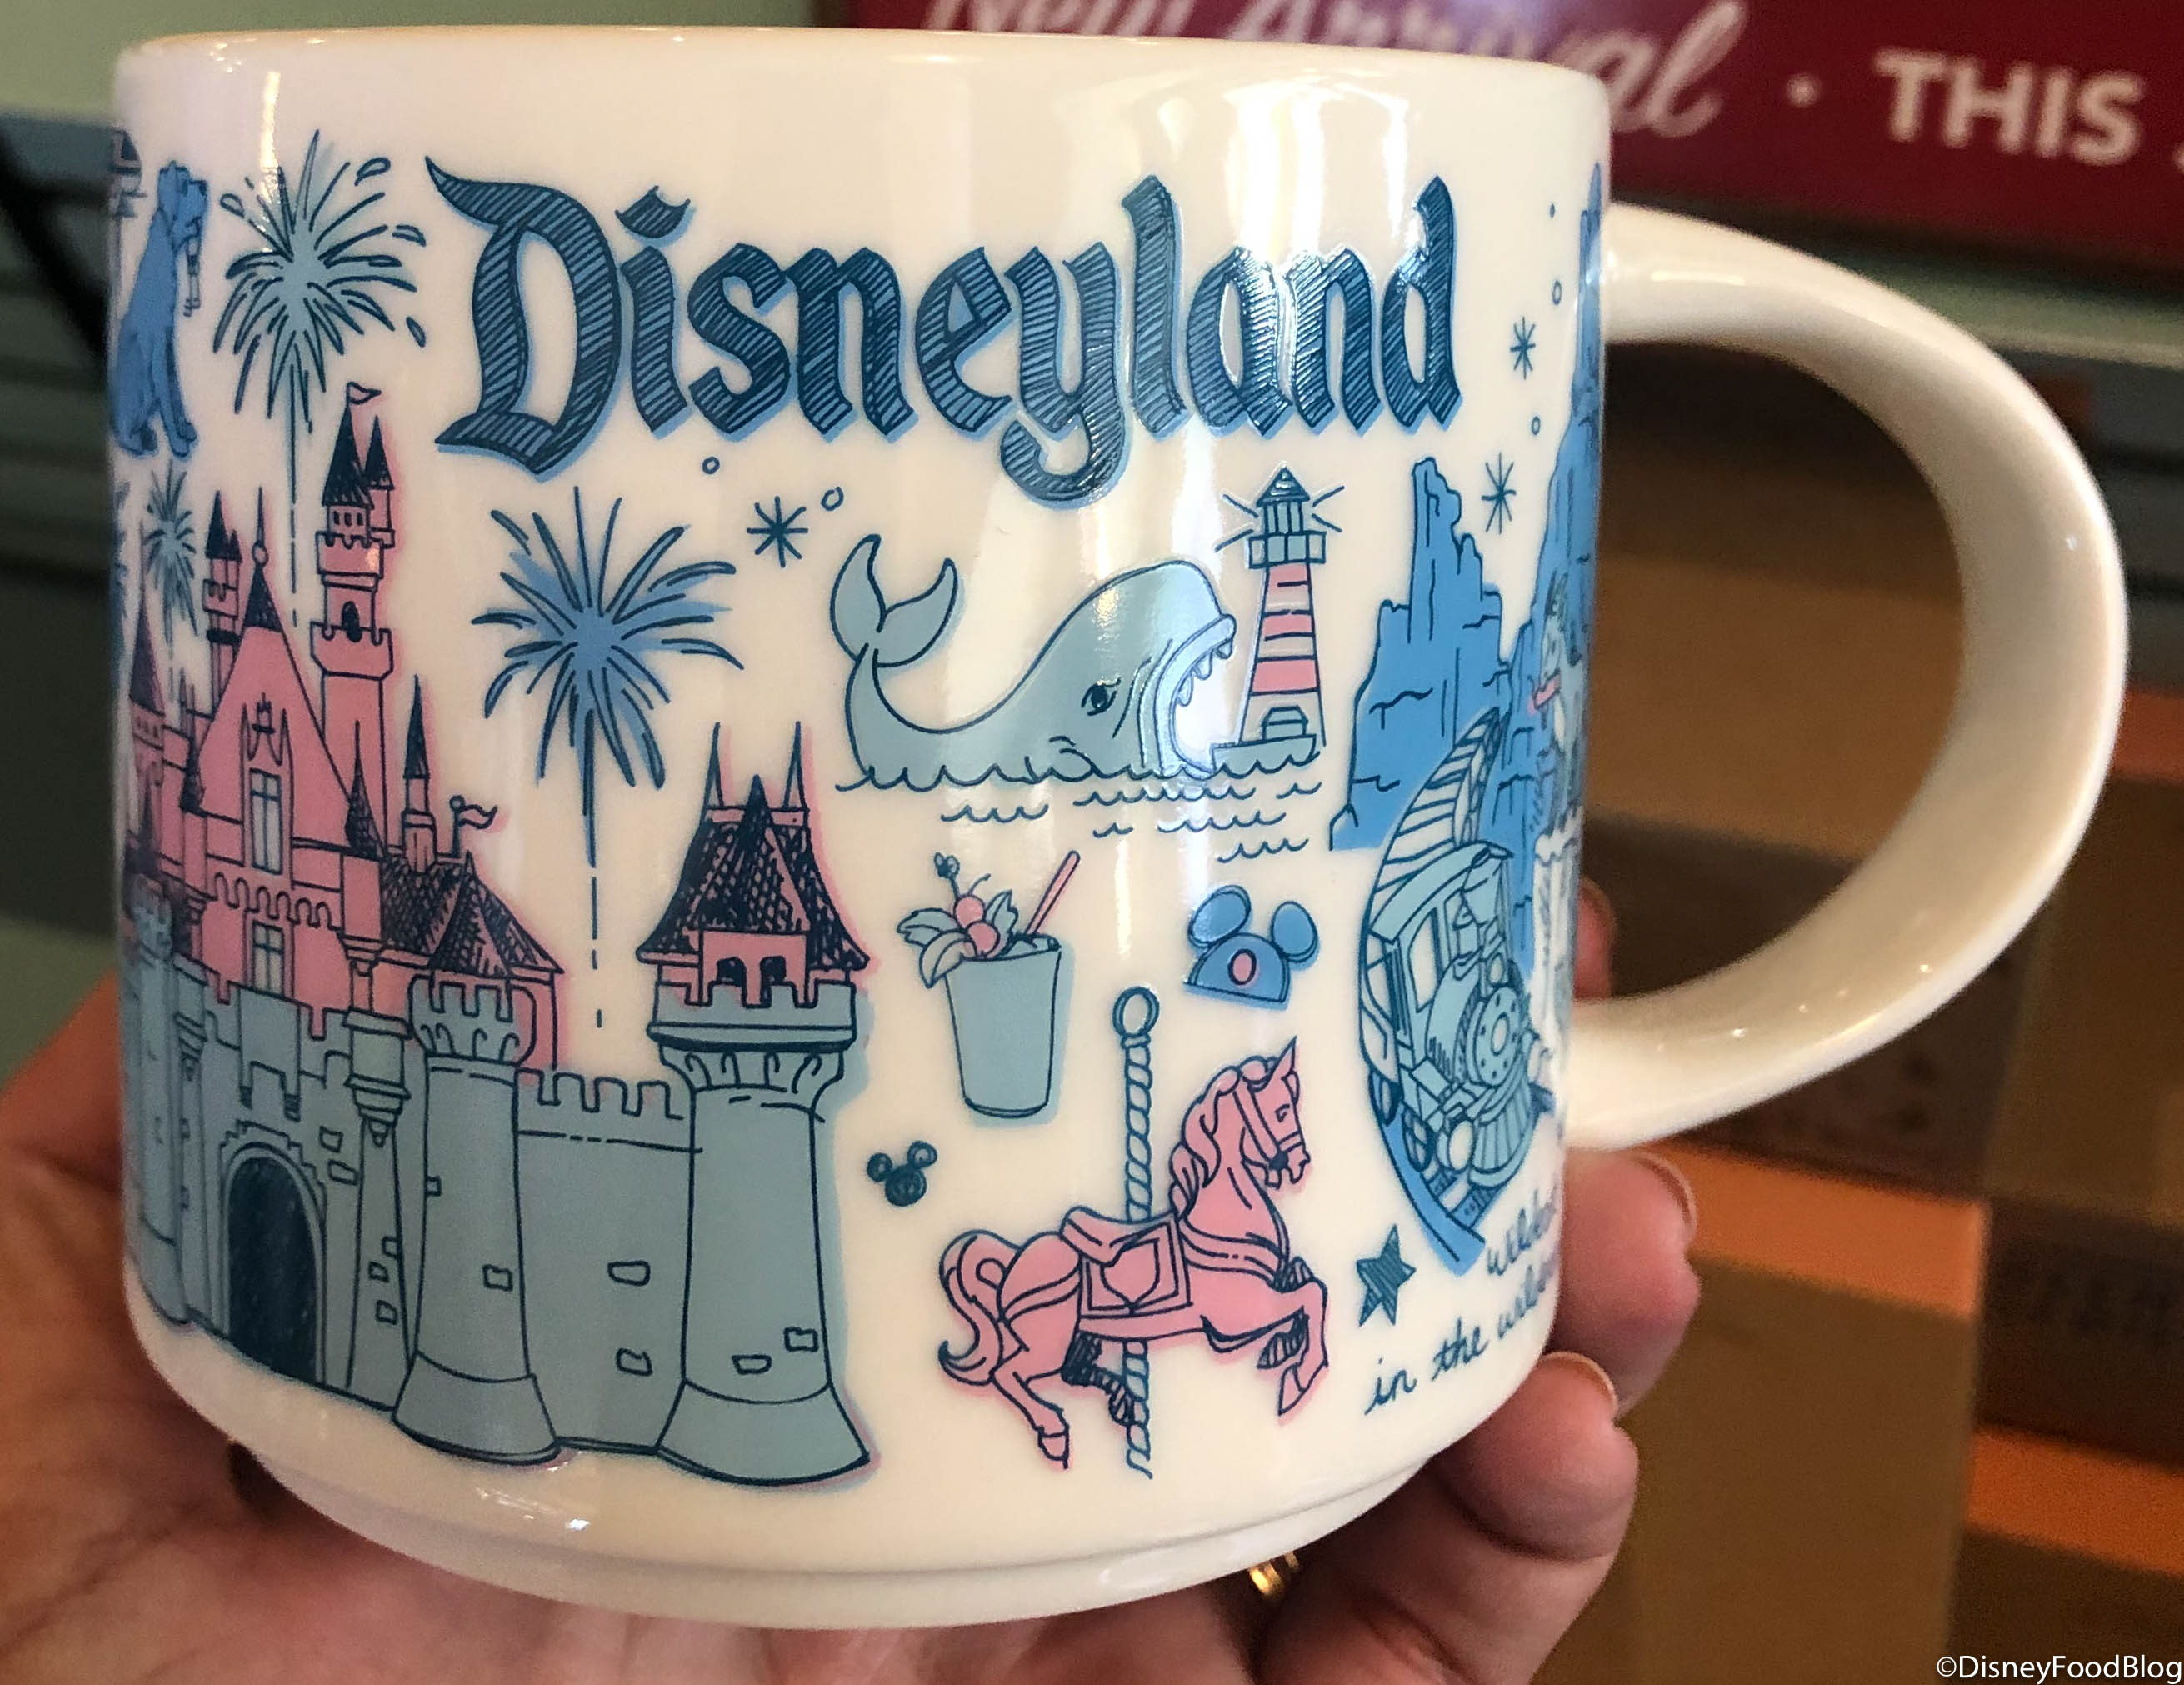 NEW! The Disneyland Starbucks "Been There" Series Mug IS